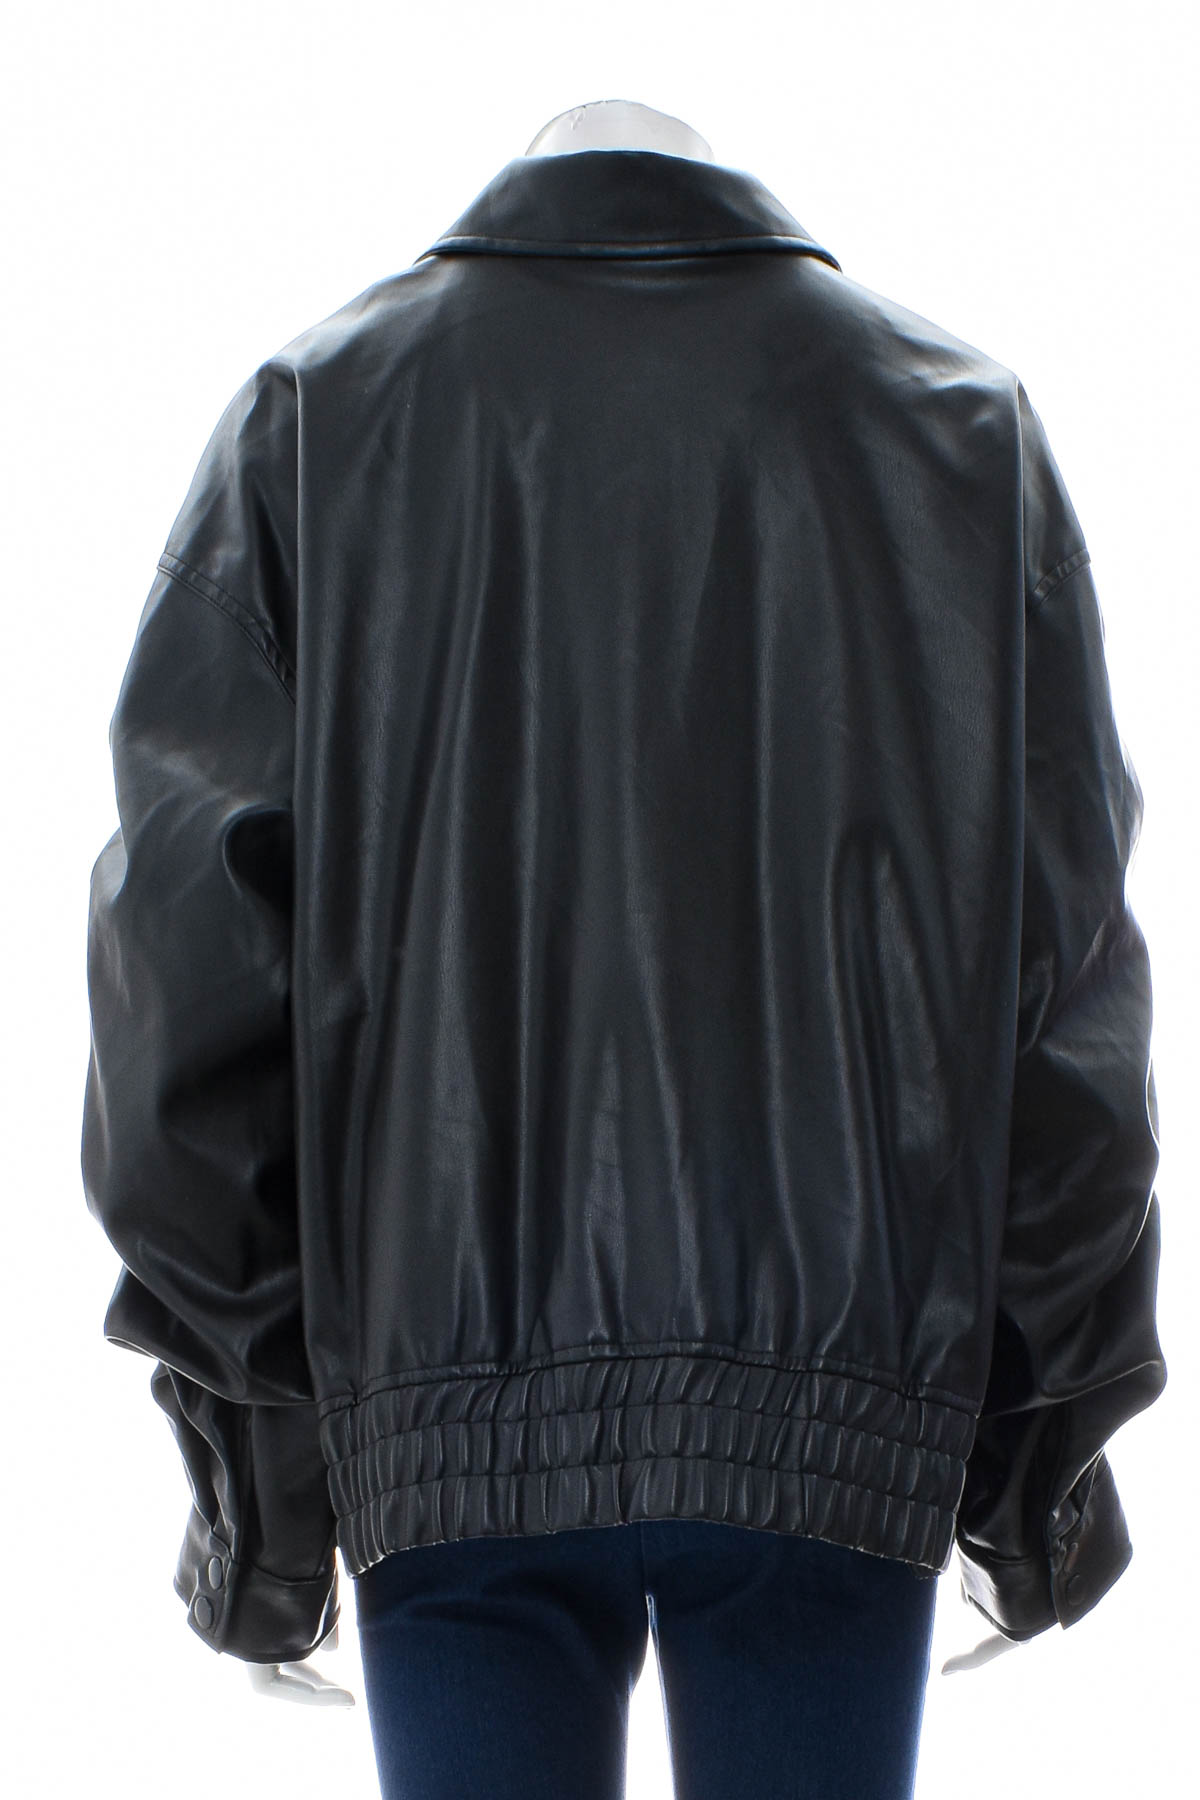 Women's leather jacket - AVA & VIV - 1